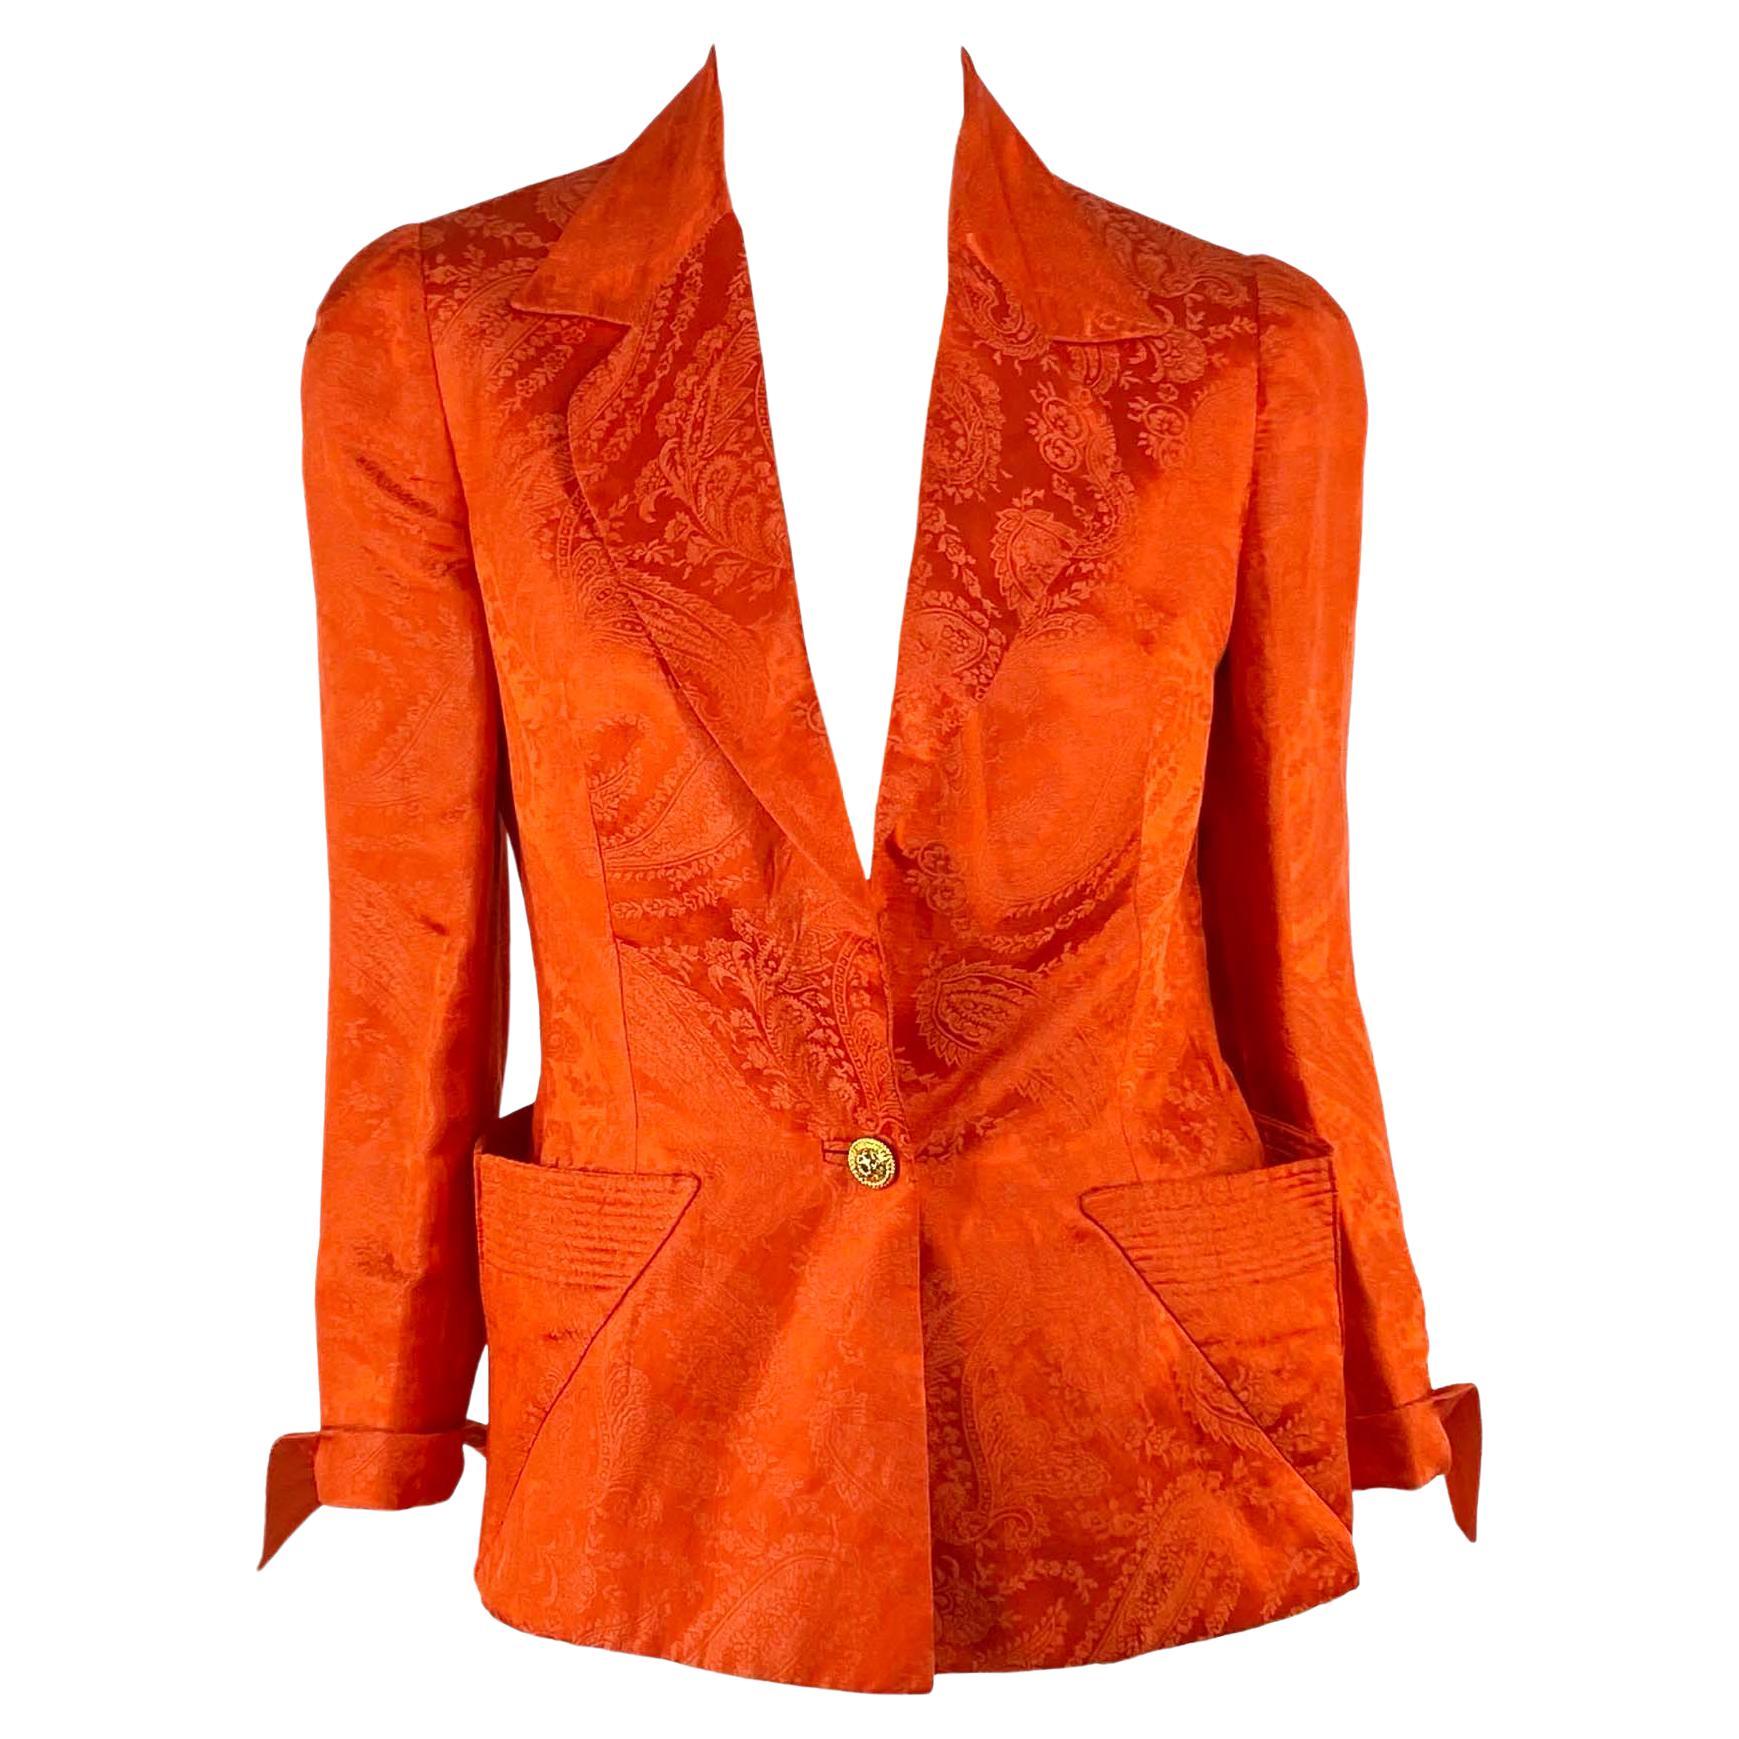 S/S 1991 Gianni Versace Couture Runway Orange Silk Paisley Print Blazer